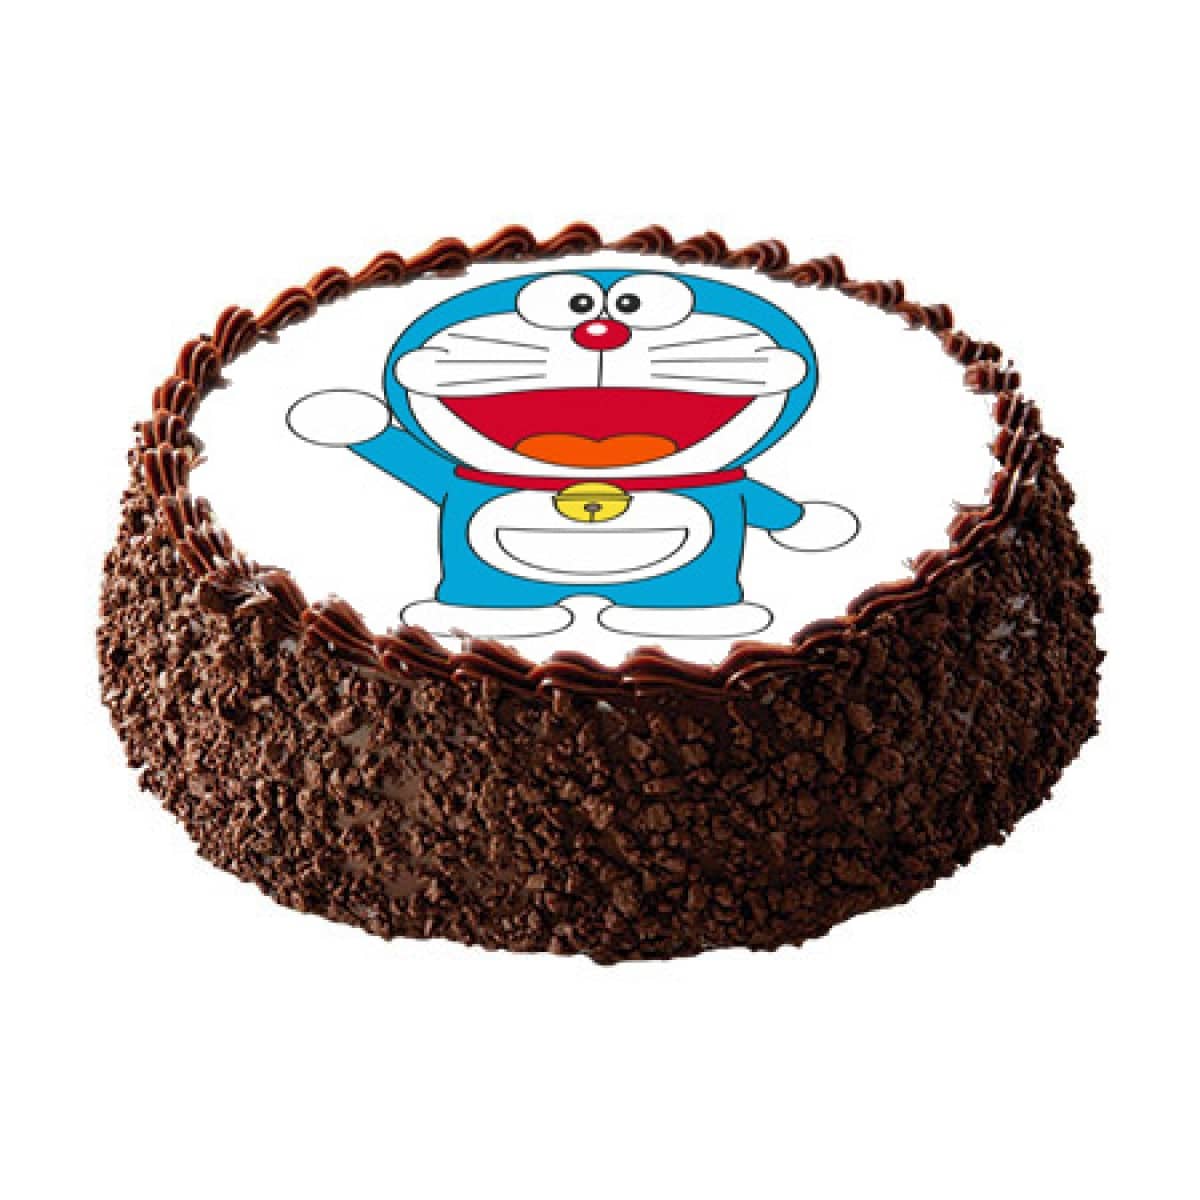 Doraemon chocolate cake